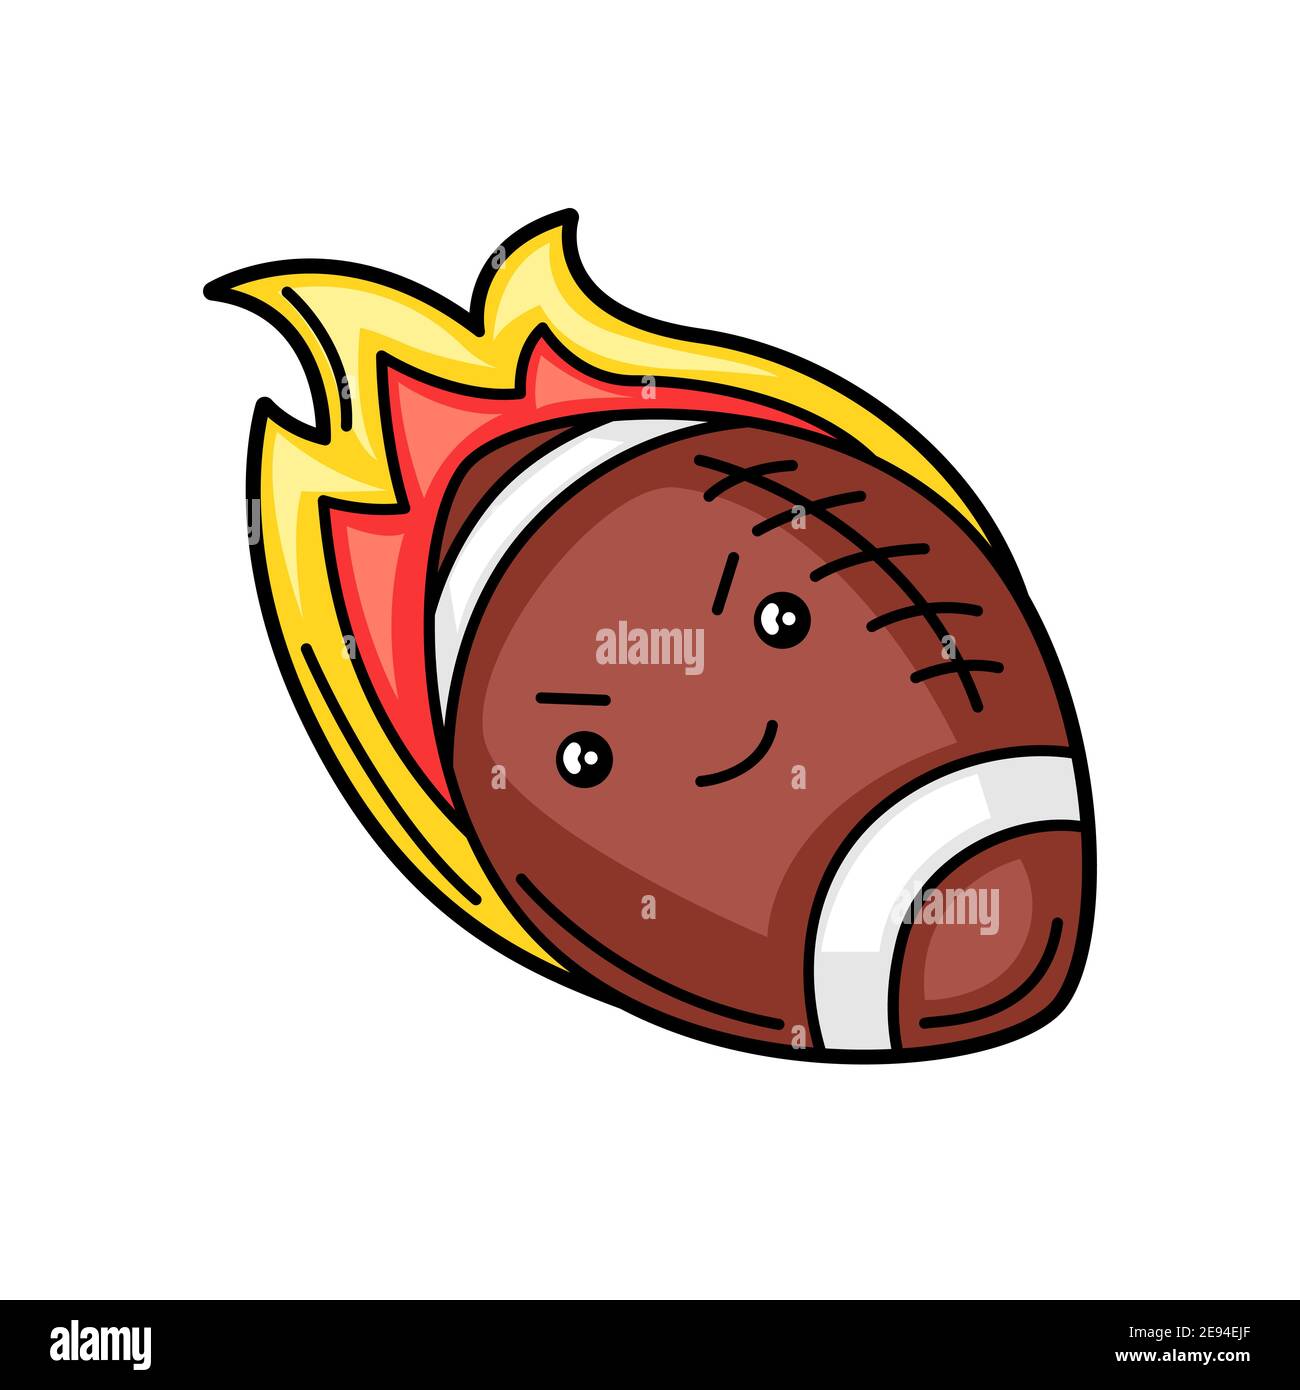 Kawaii illustration of burning rugby ball Stock Vector Image & Art - Alamy